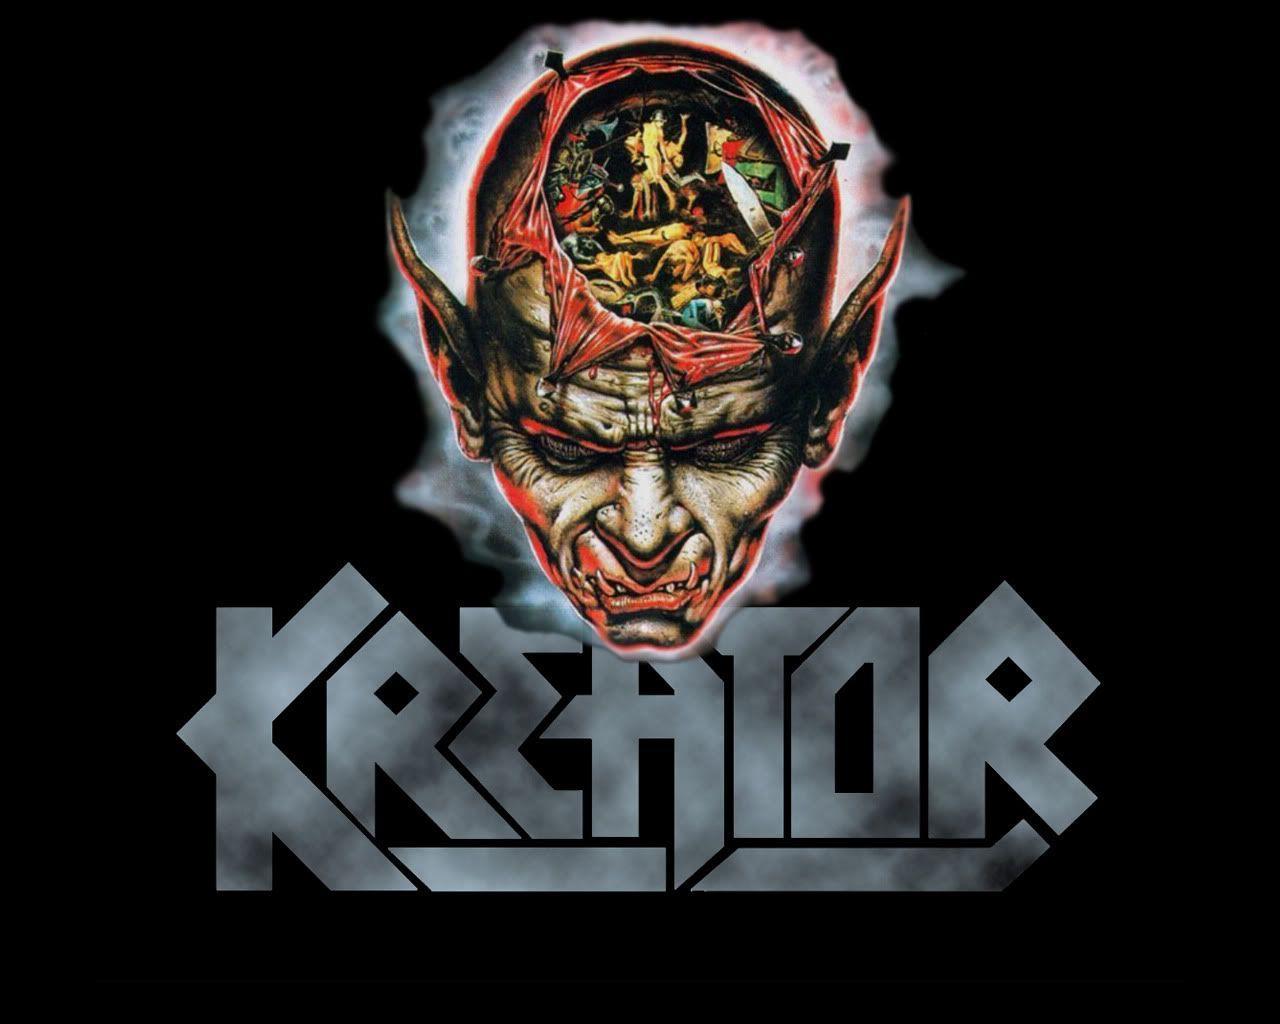 kreator logo wallpaper